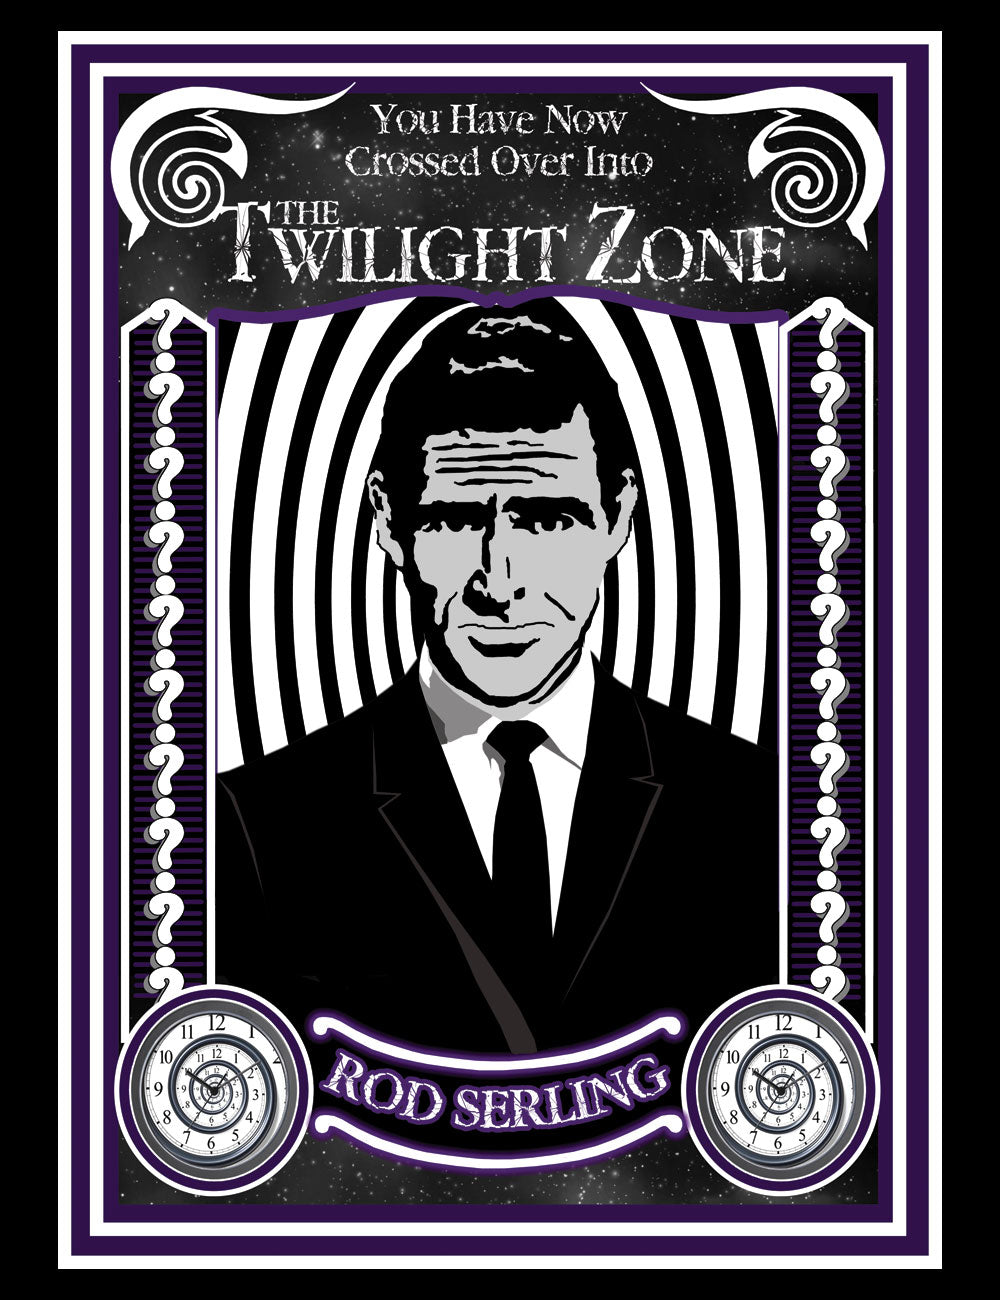 The Twilight Zone T-Shirt Rod Serling